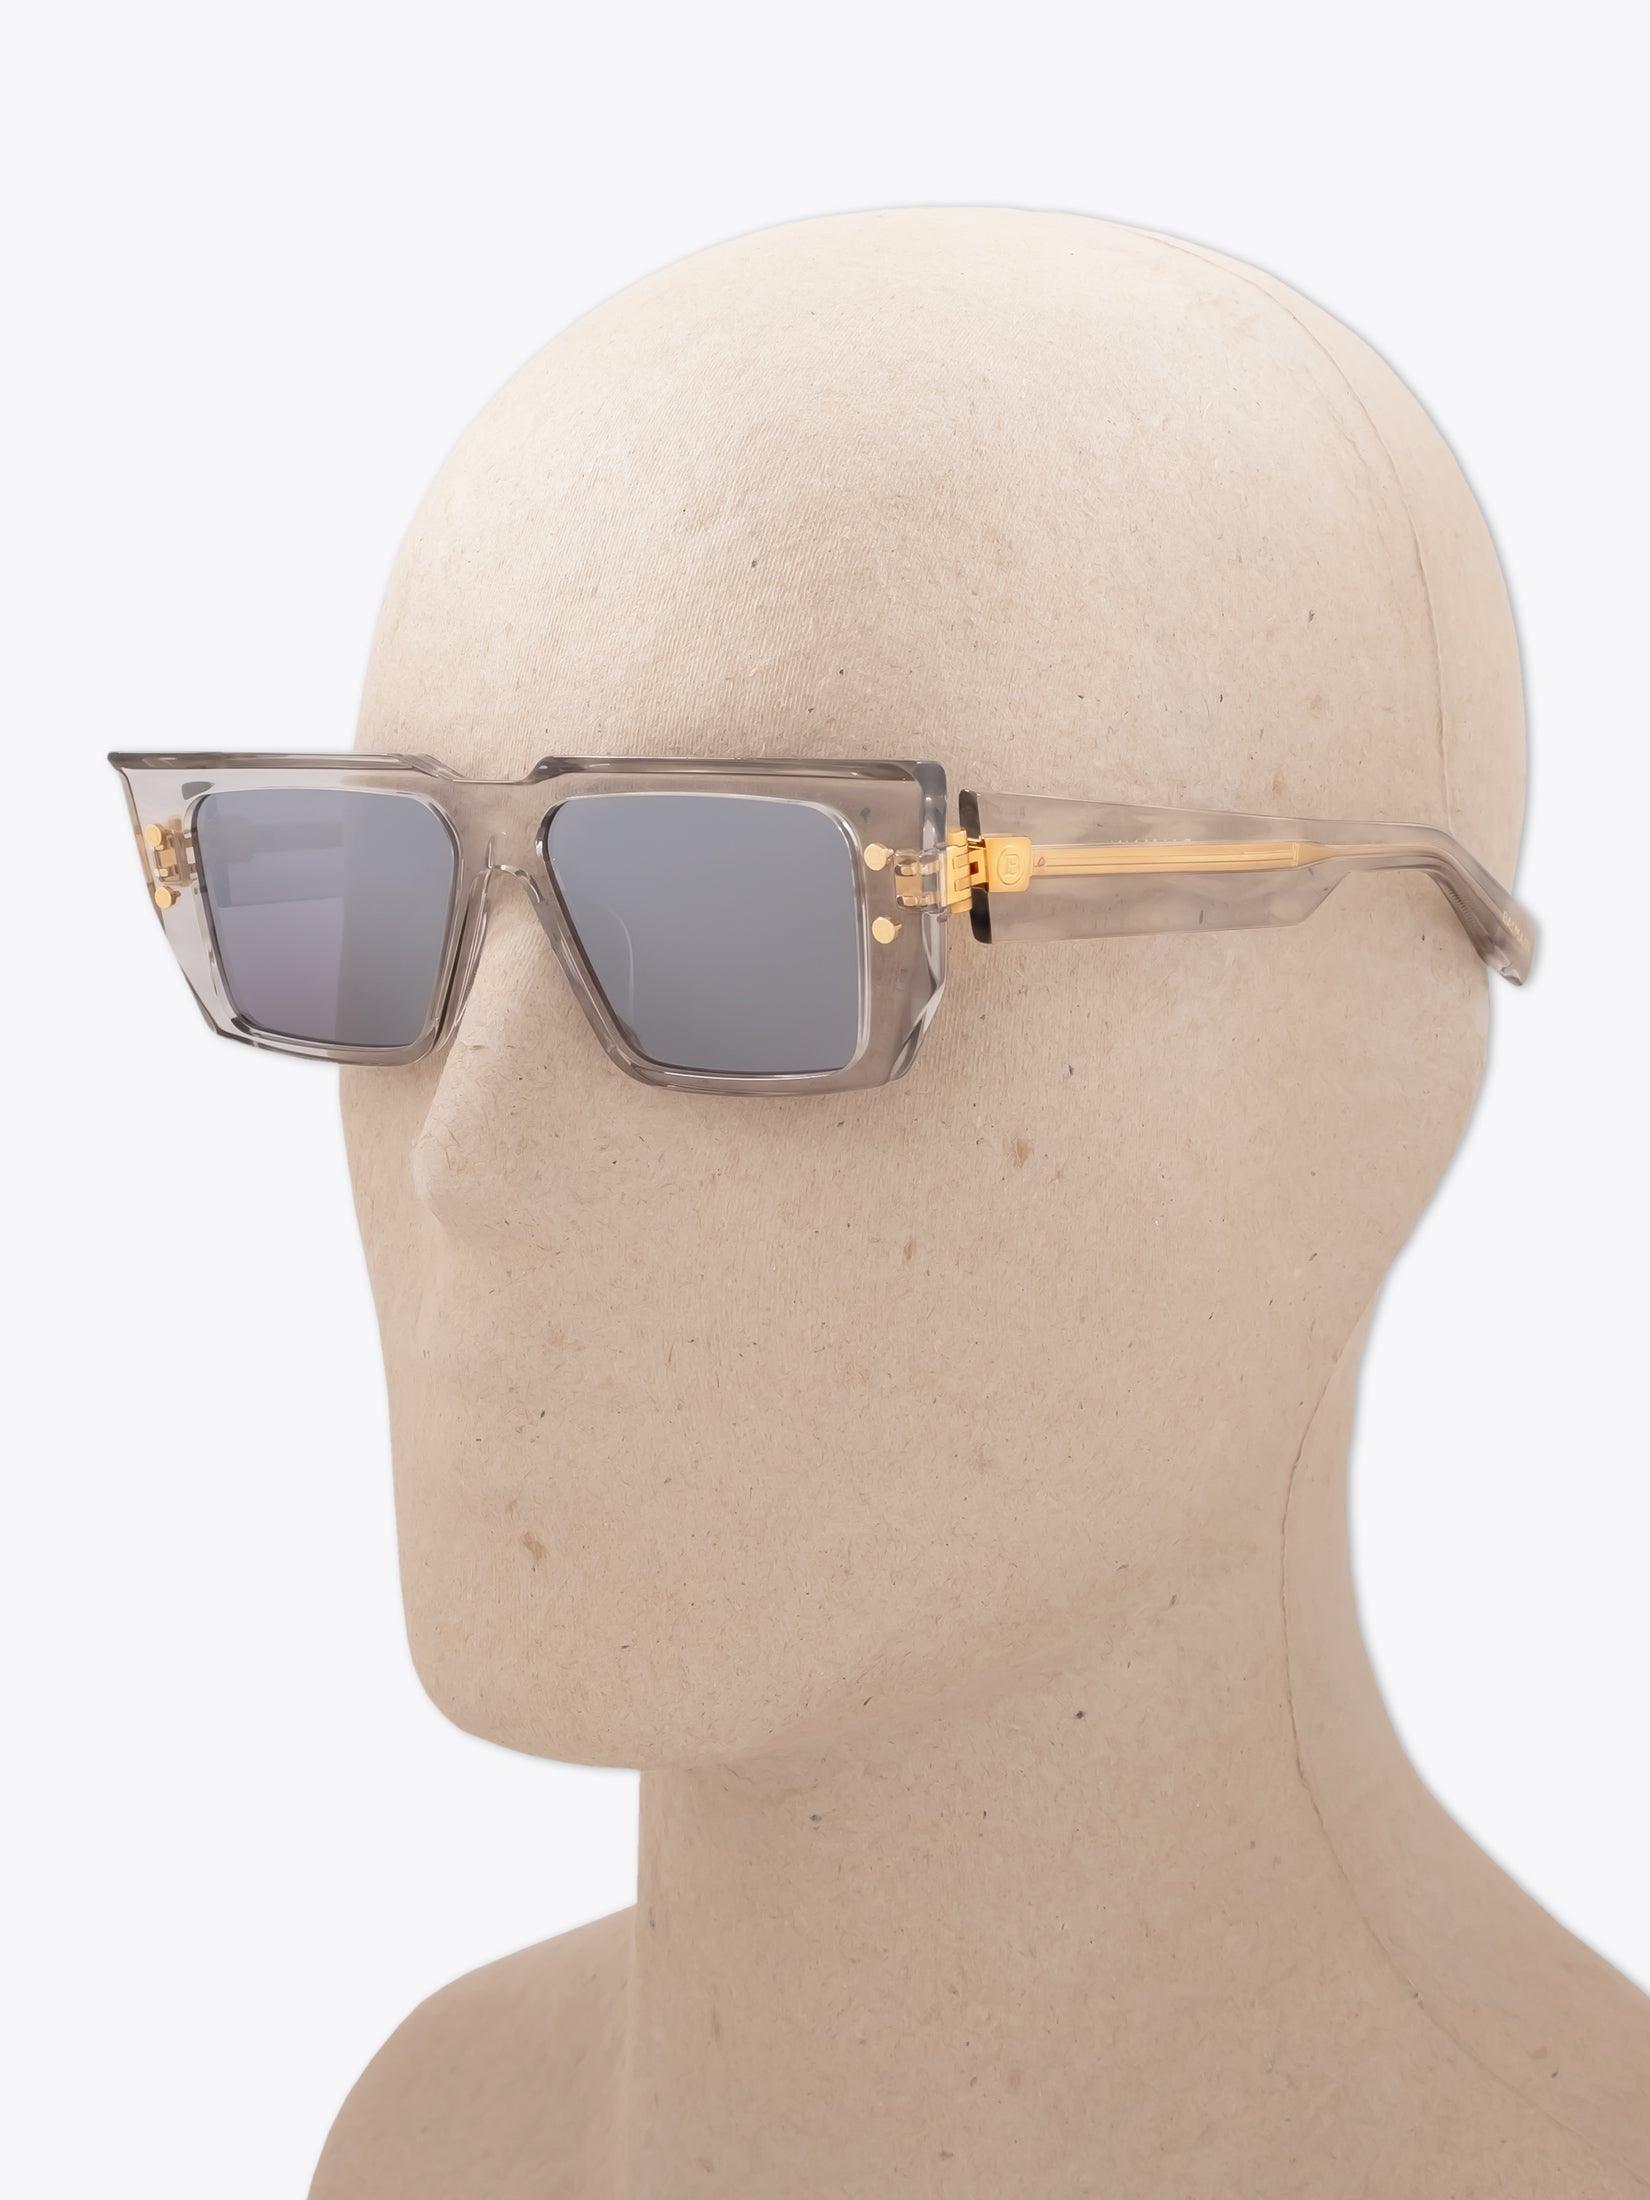 BALMAIN B-VI Grey Crystal Sunglasses